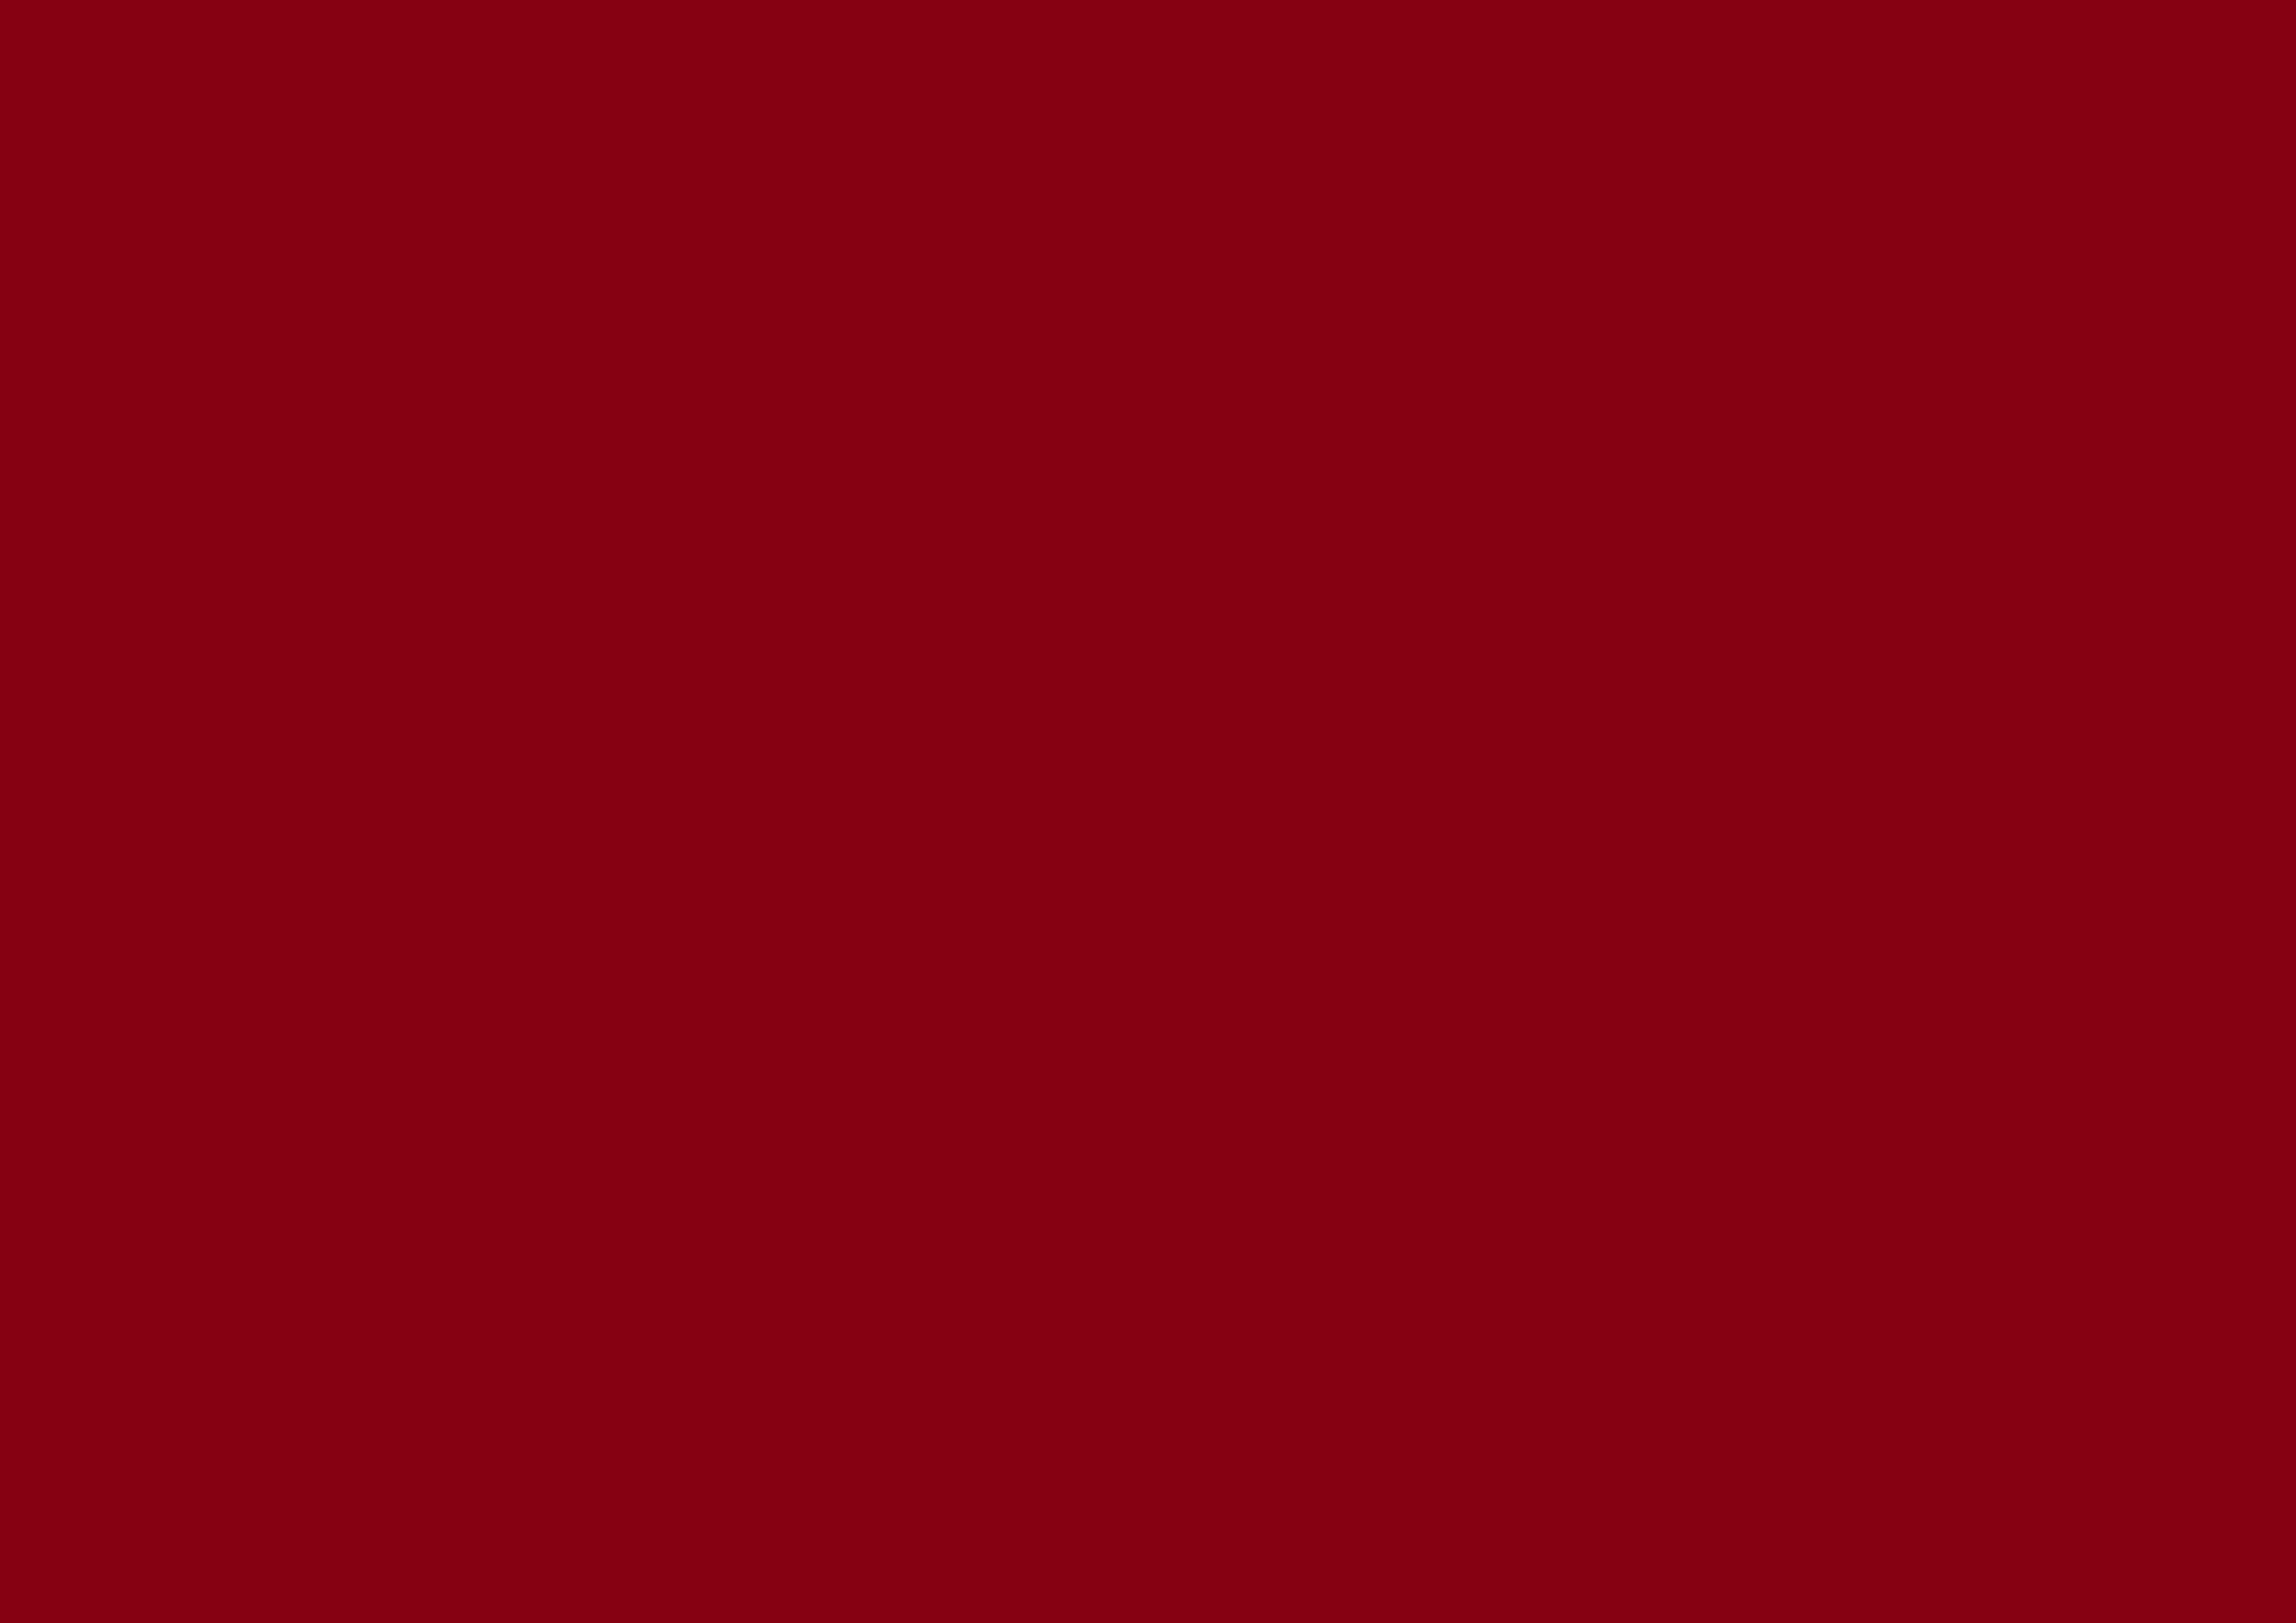 3508x2480 Red Devil Solid Color Background